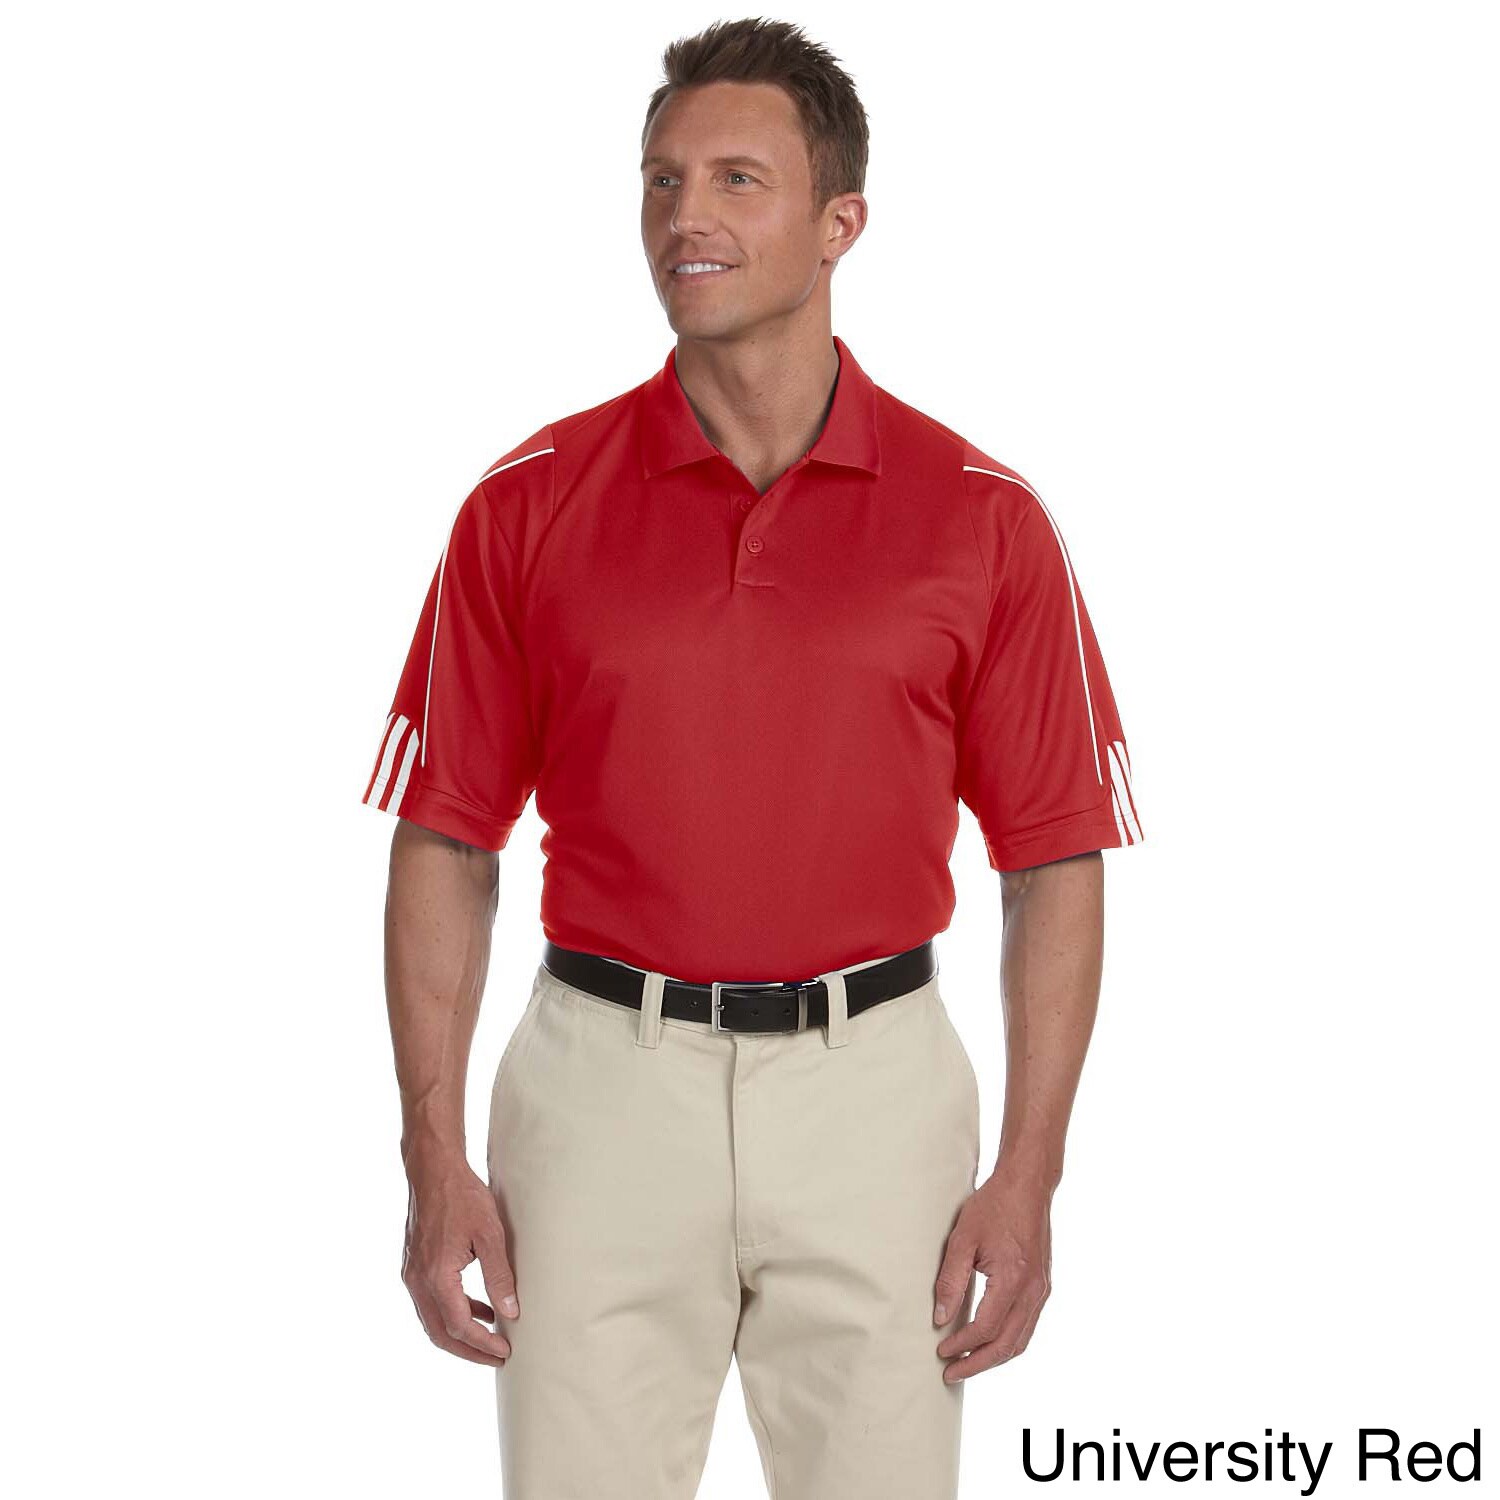 Adidas Mens Climalite 3 stripes Cuffed Polo Shirt